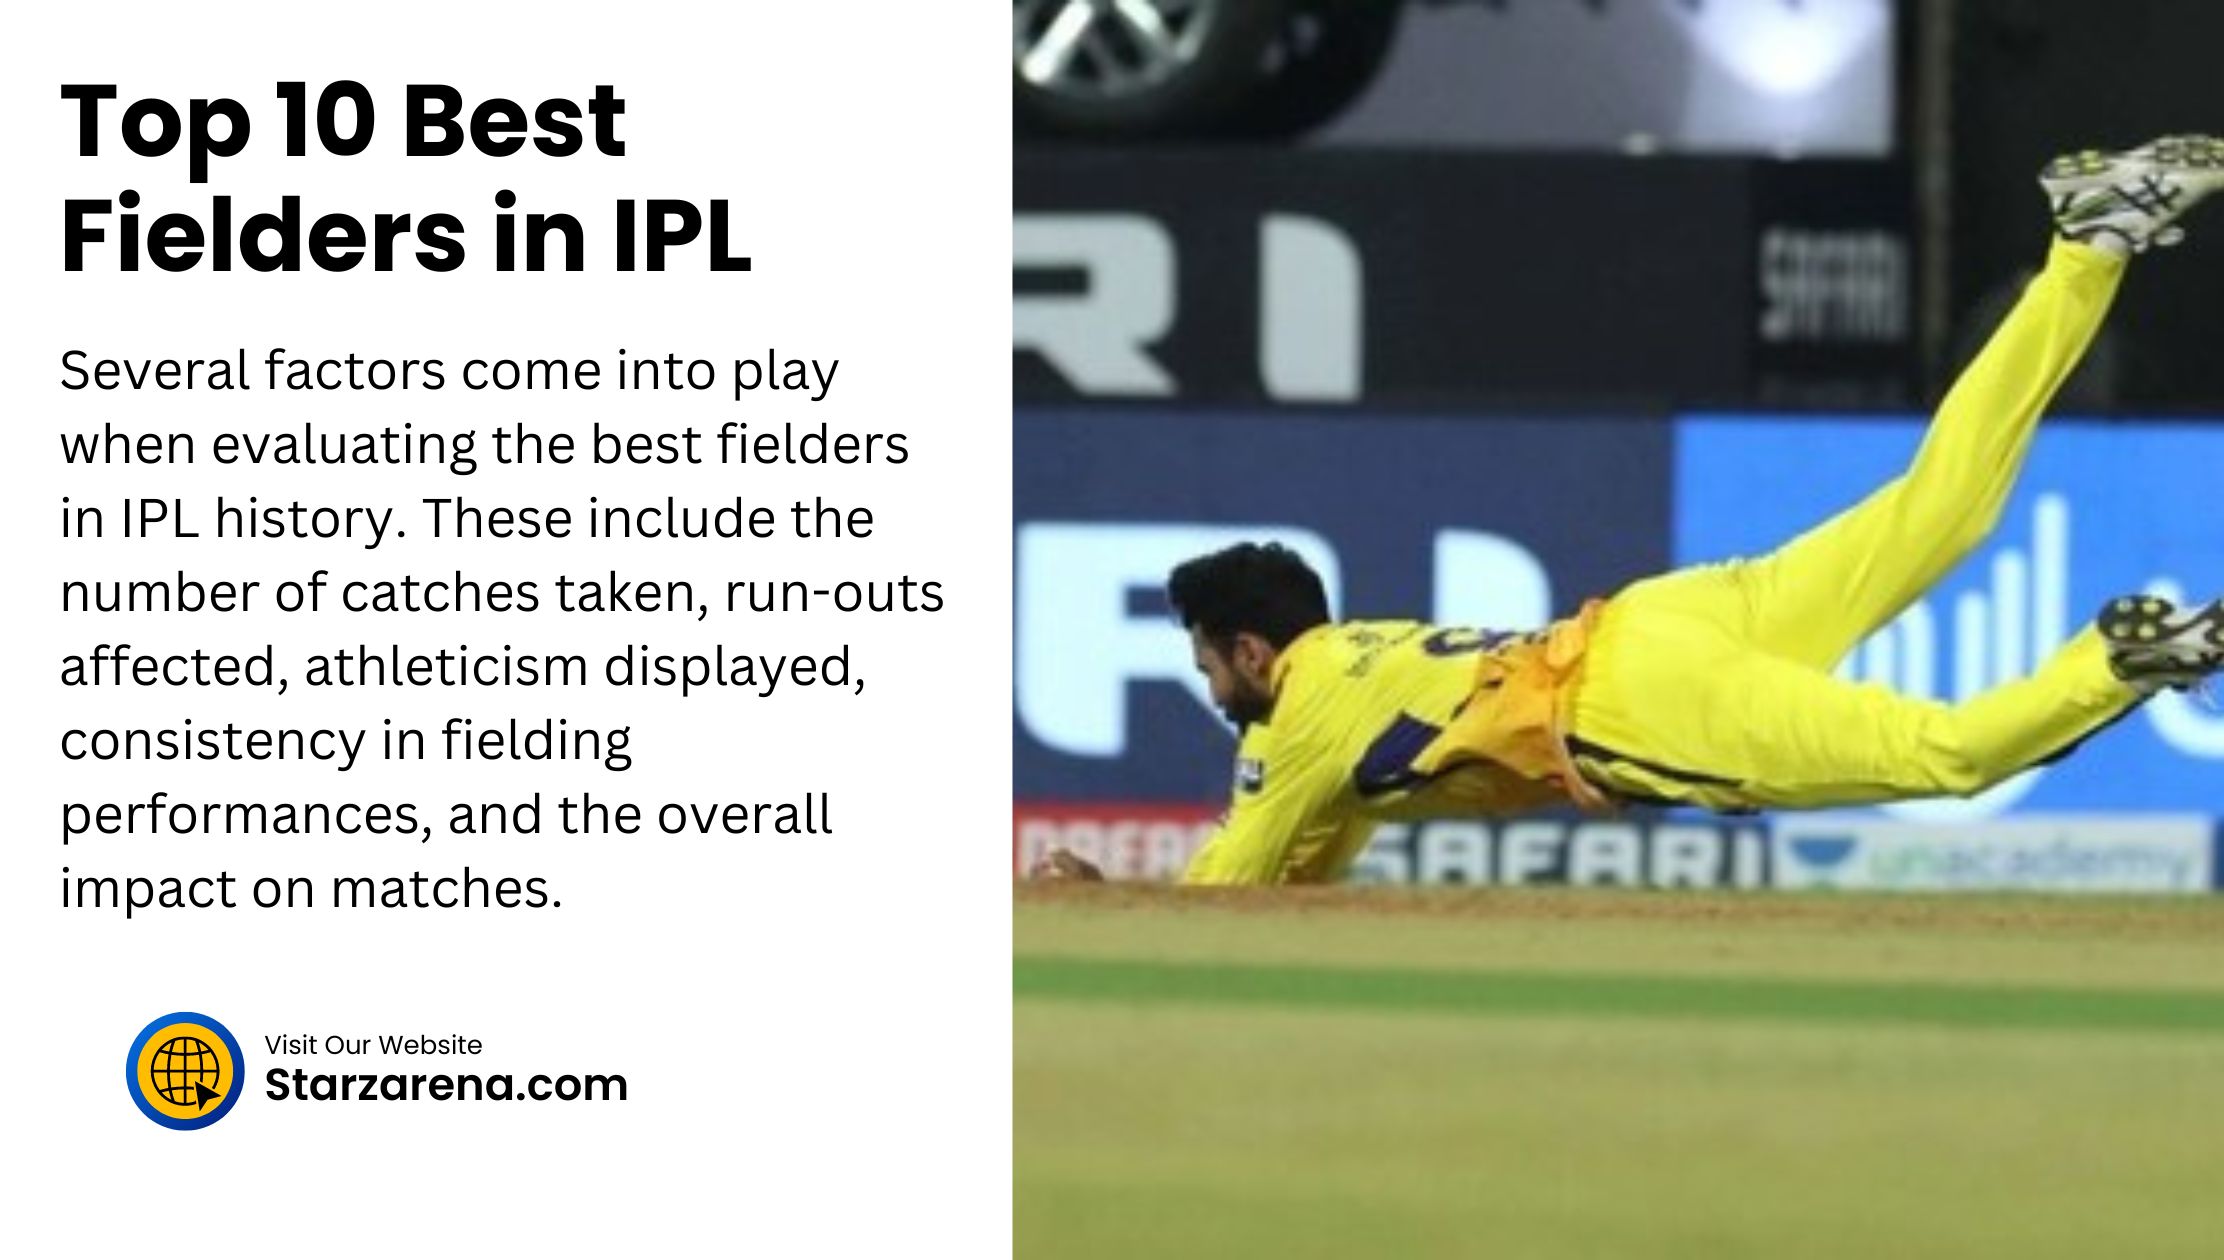 Top 10 Best Fielders in IPL